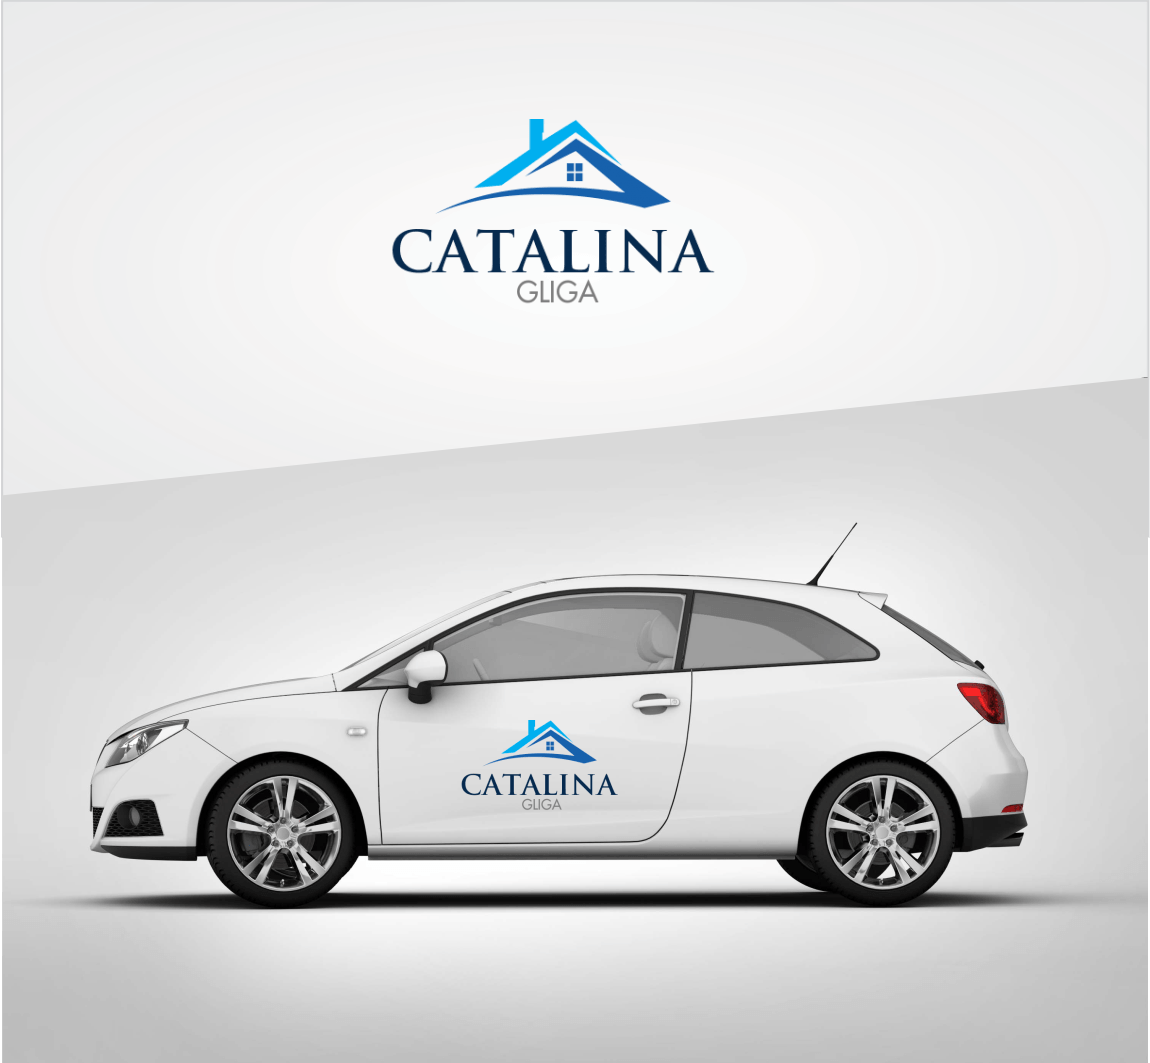 Catalina Car Logo - Elegant, Playful, Architecture Logo Design for CATALINA GLIGA by ...